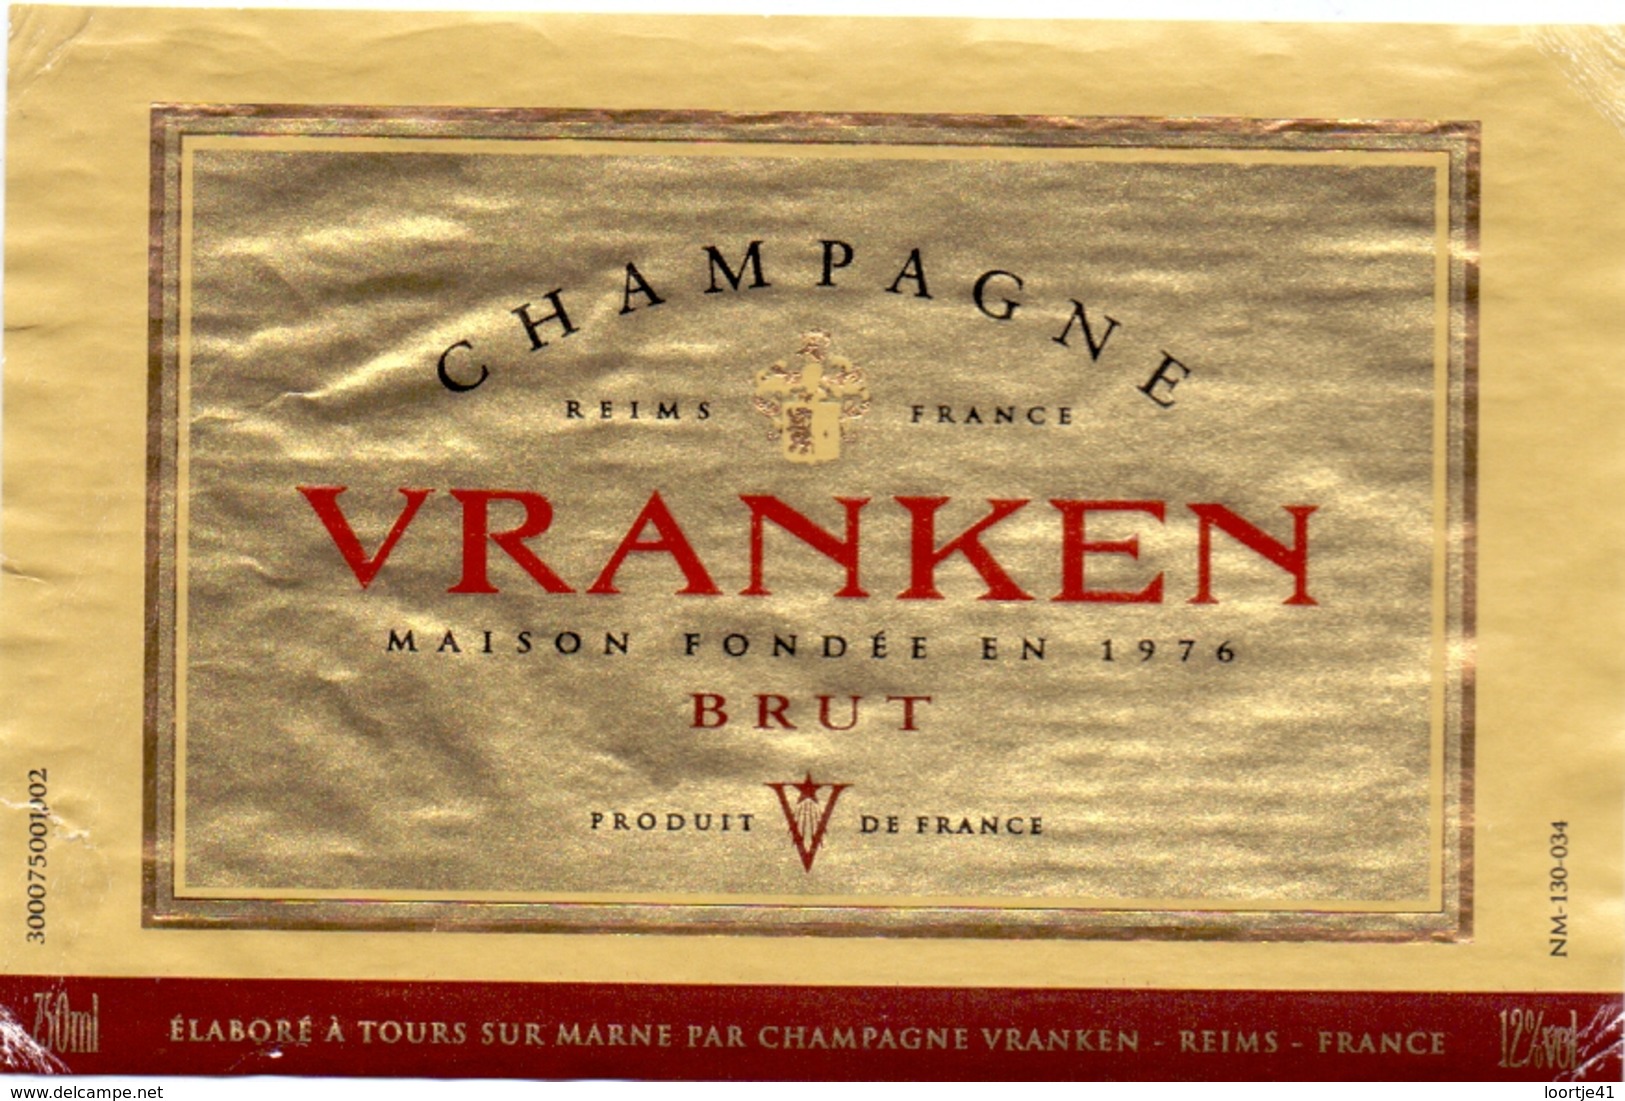 Vranken Etikety na šampaňské staré